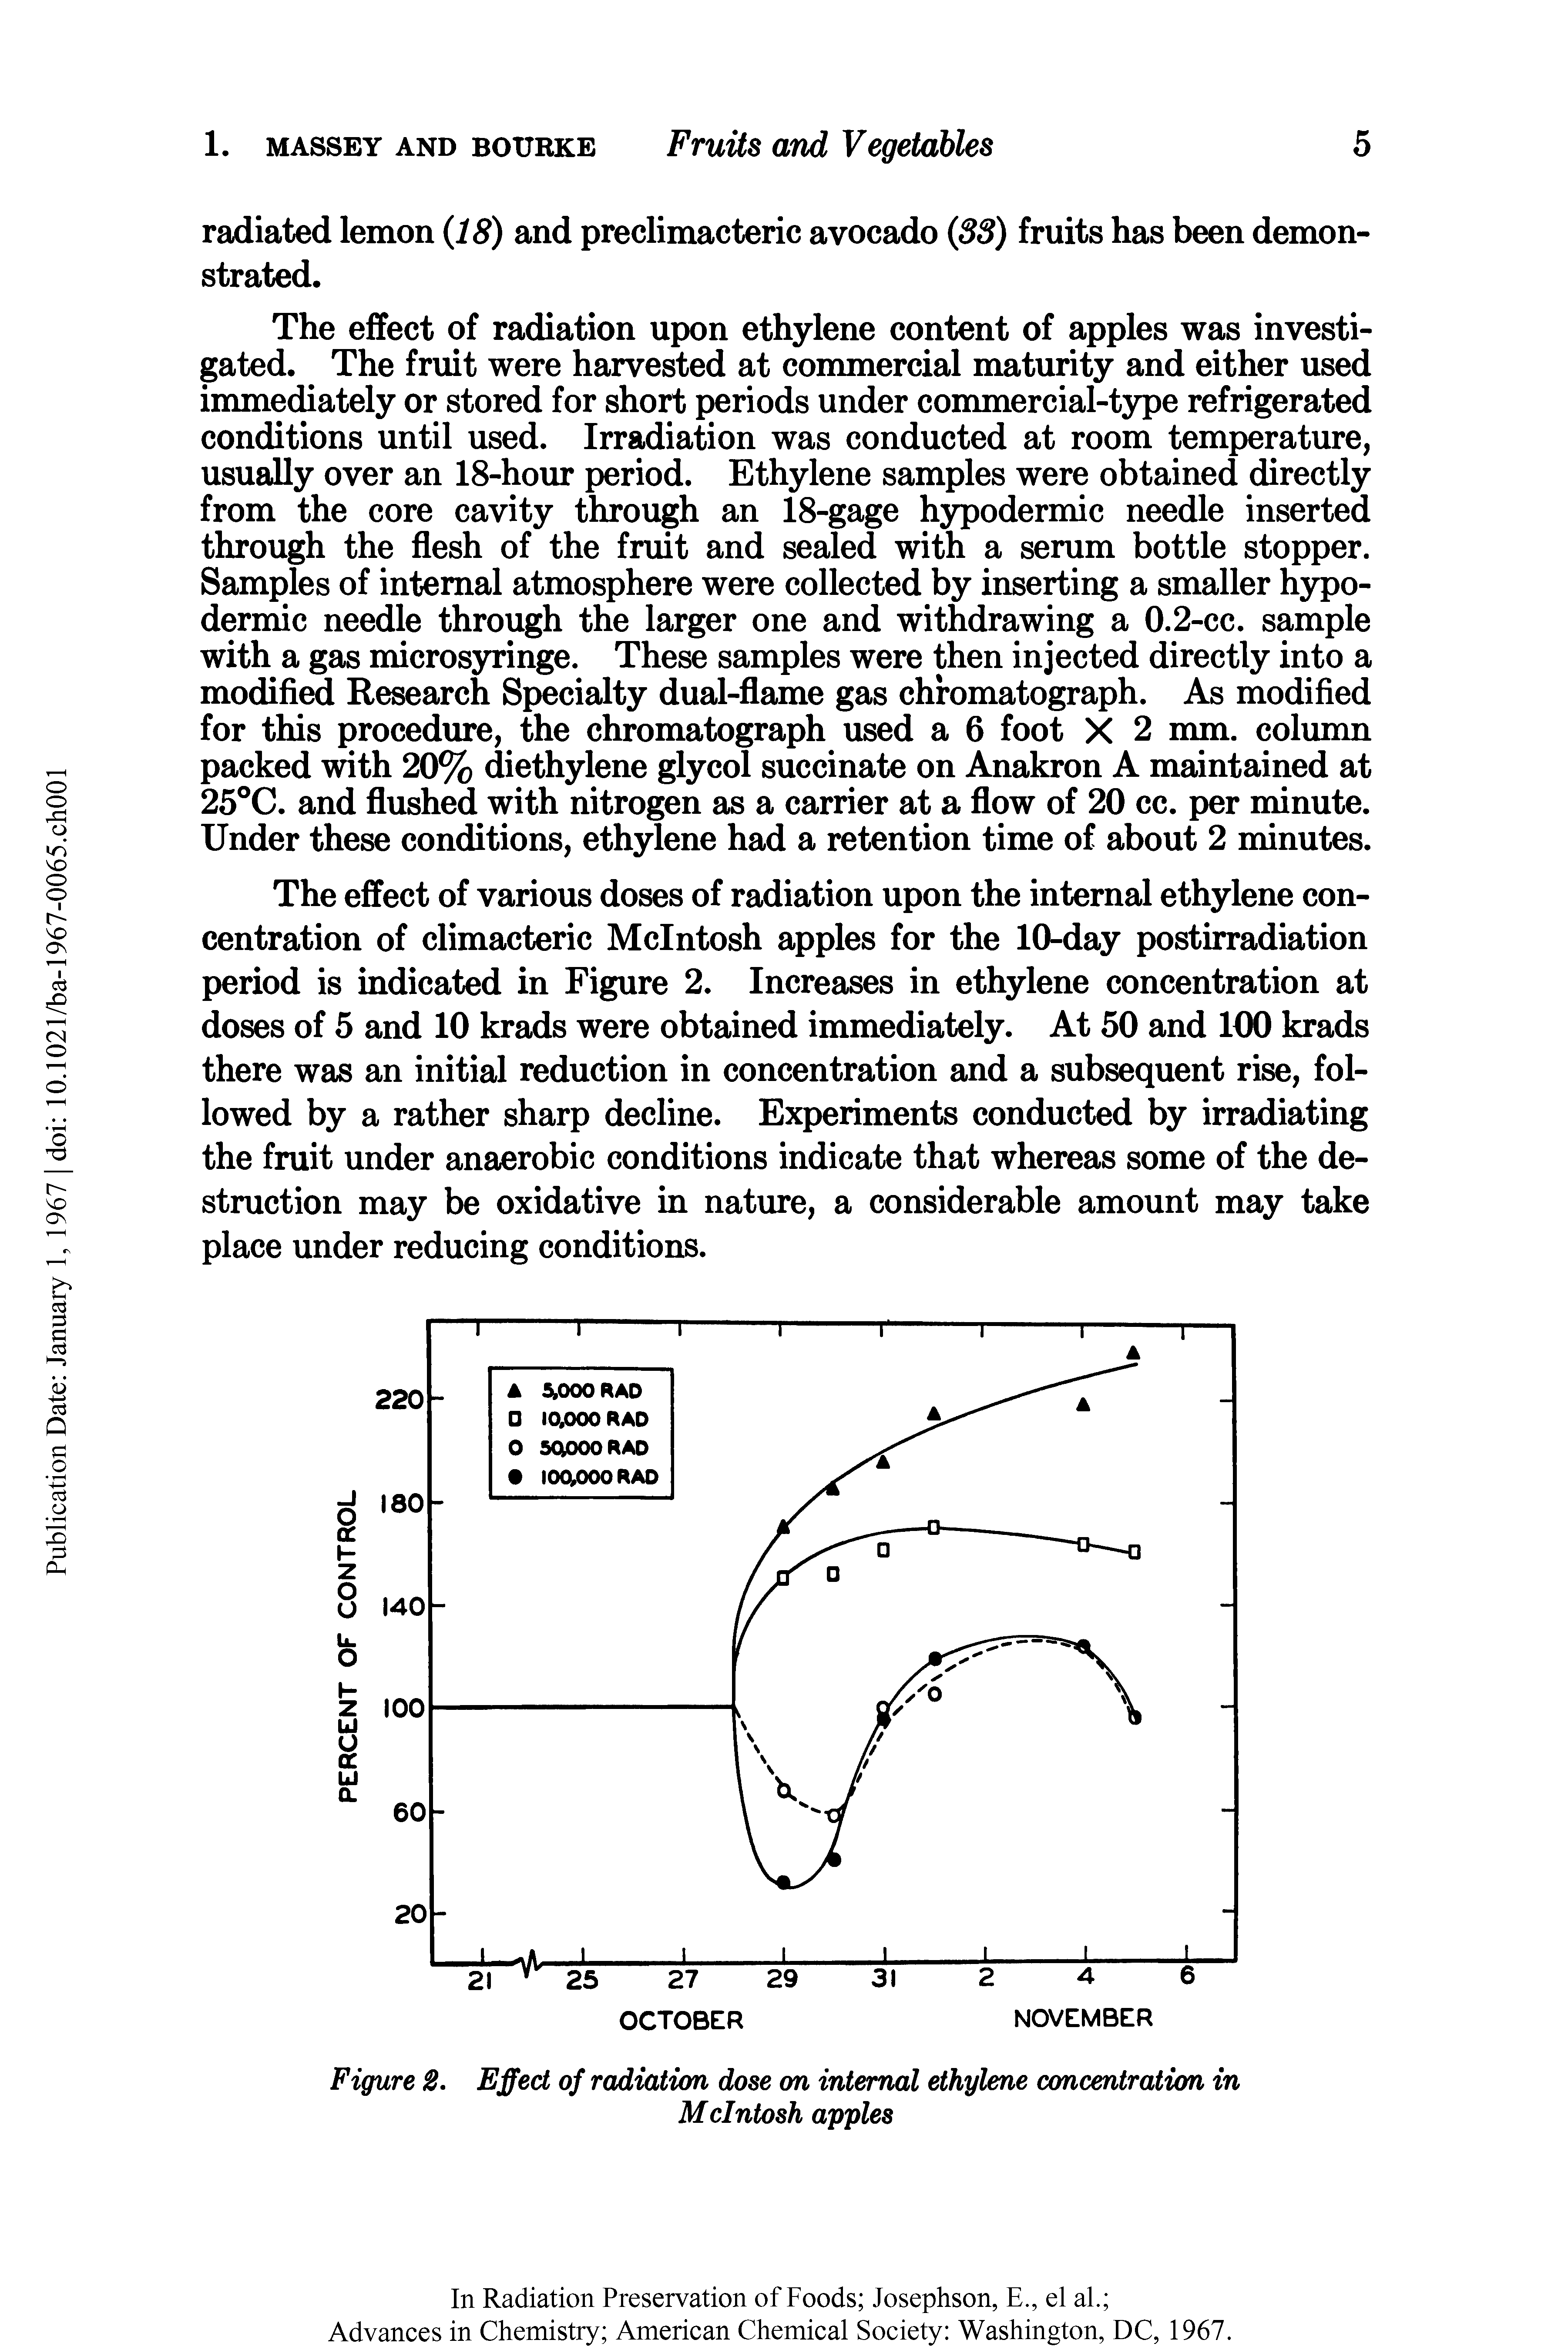 Figure 2. Effect of radiation dose on internal ethylene concentration in McIntosh apples...